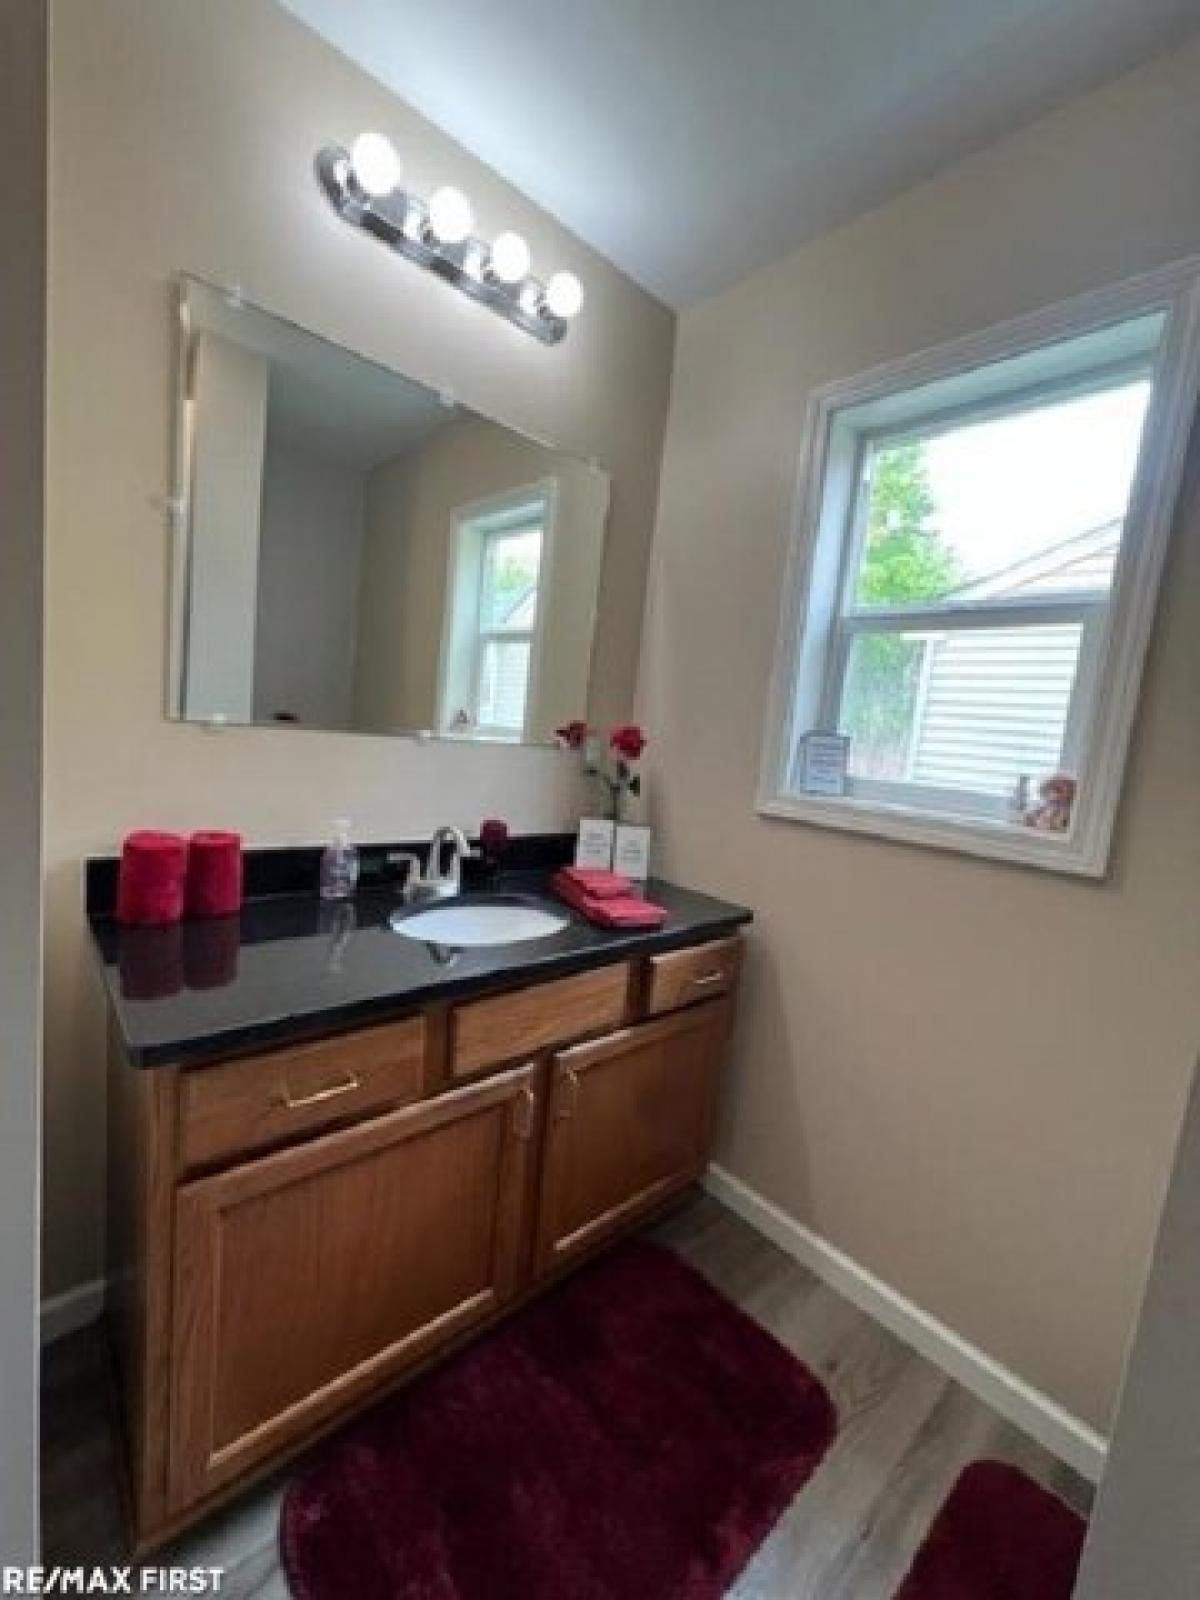 Picture of Home For Sale in Algonac, Michigan, United States